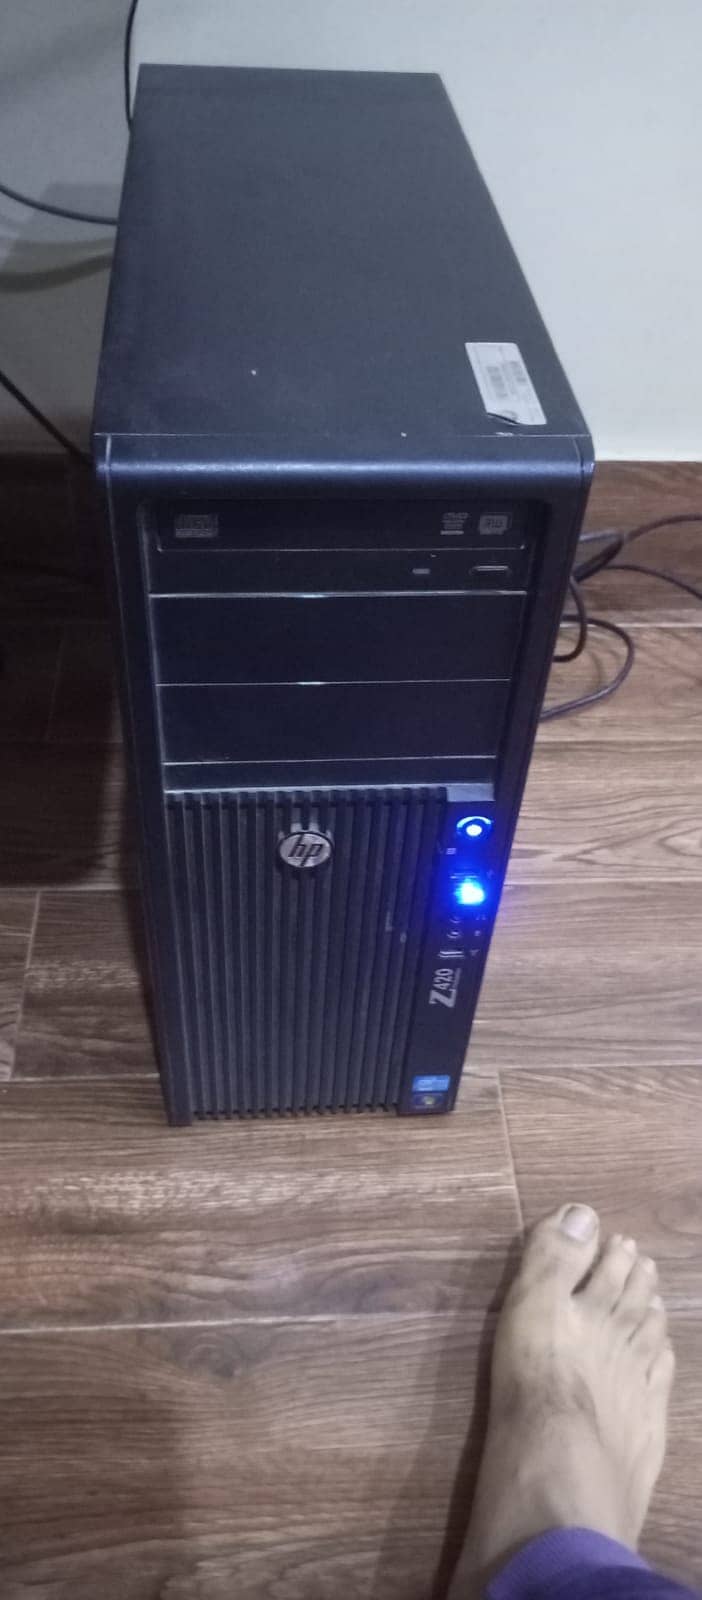 HP Z420 Workstation System 0